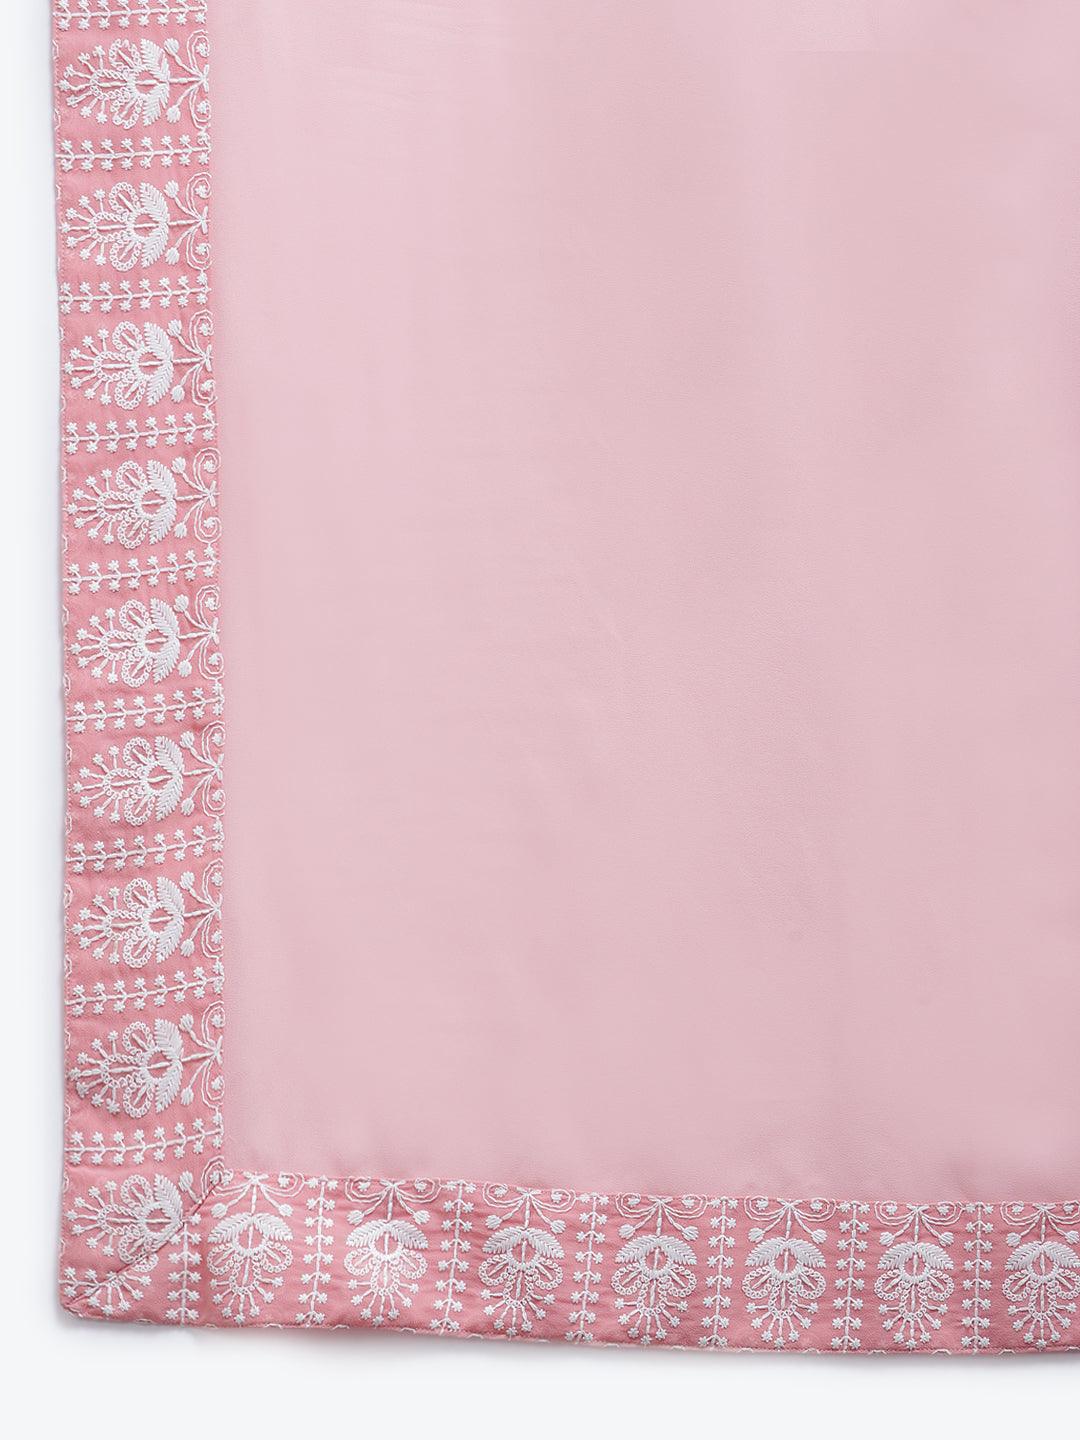 Pink Embroidered Georgette Pakistani Style Kurta With Sharara & Dupatta